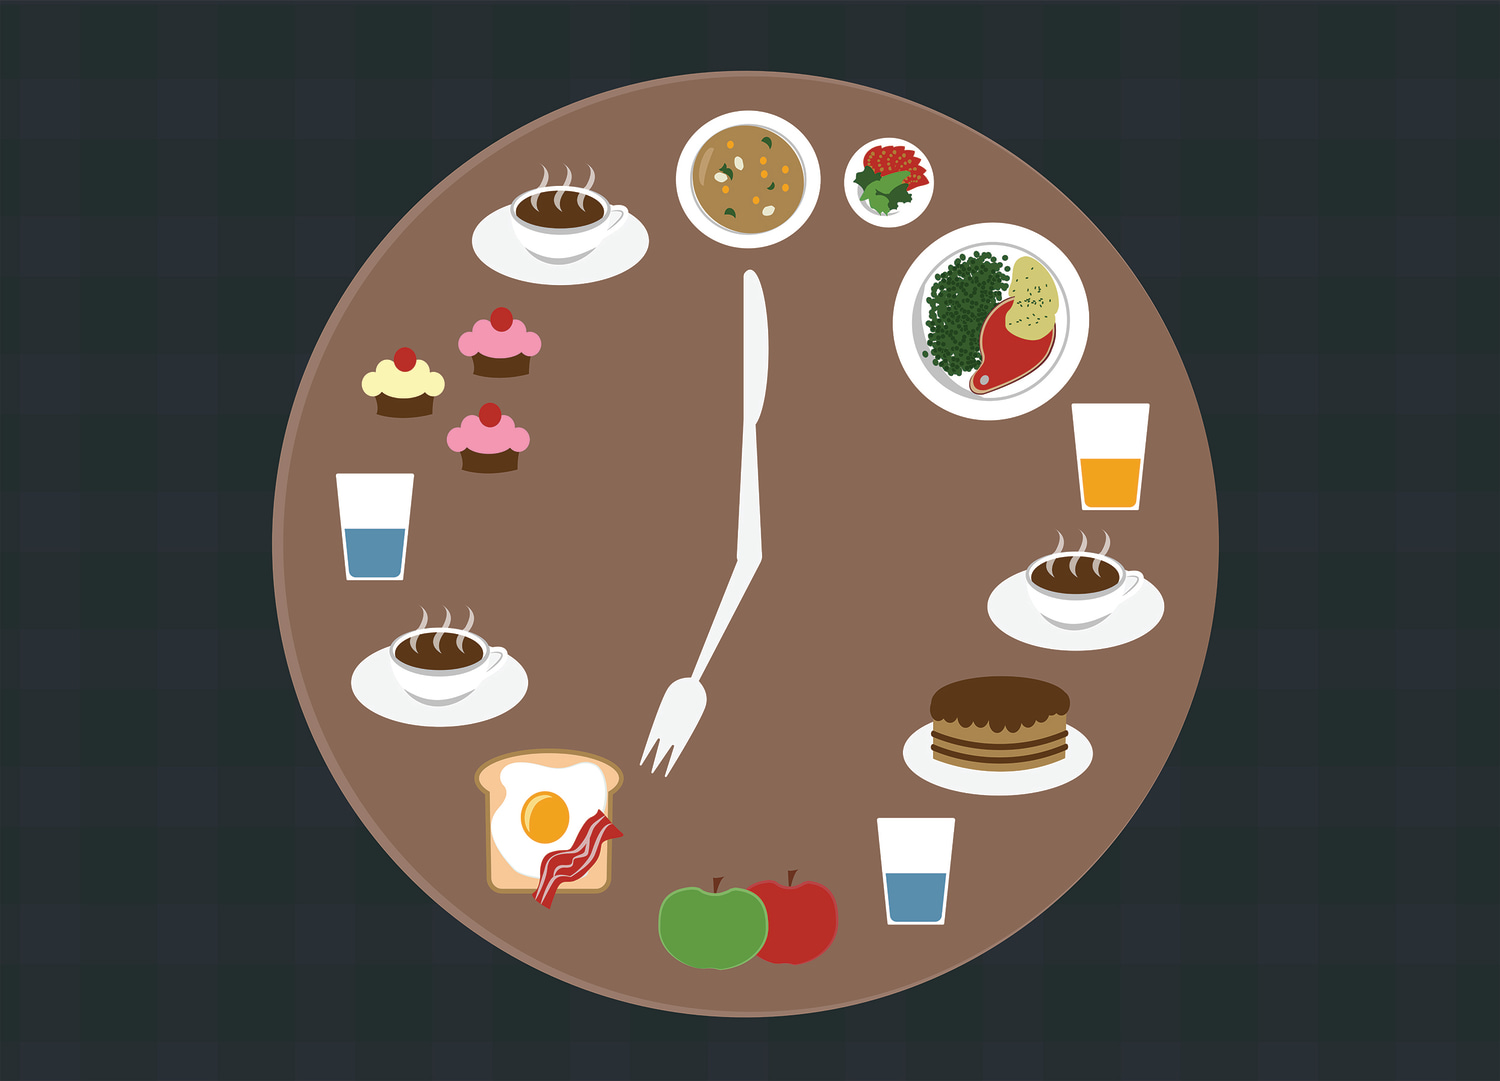 Time-based eating habits